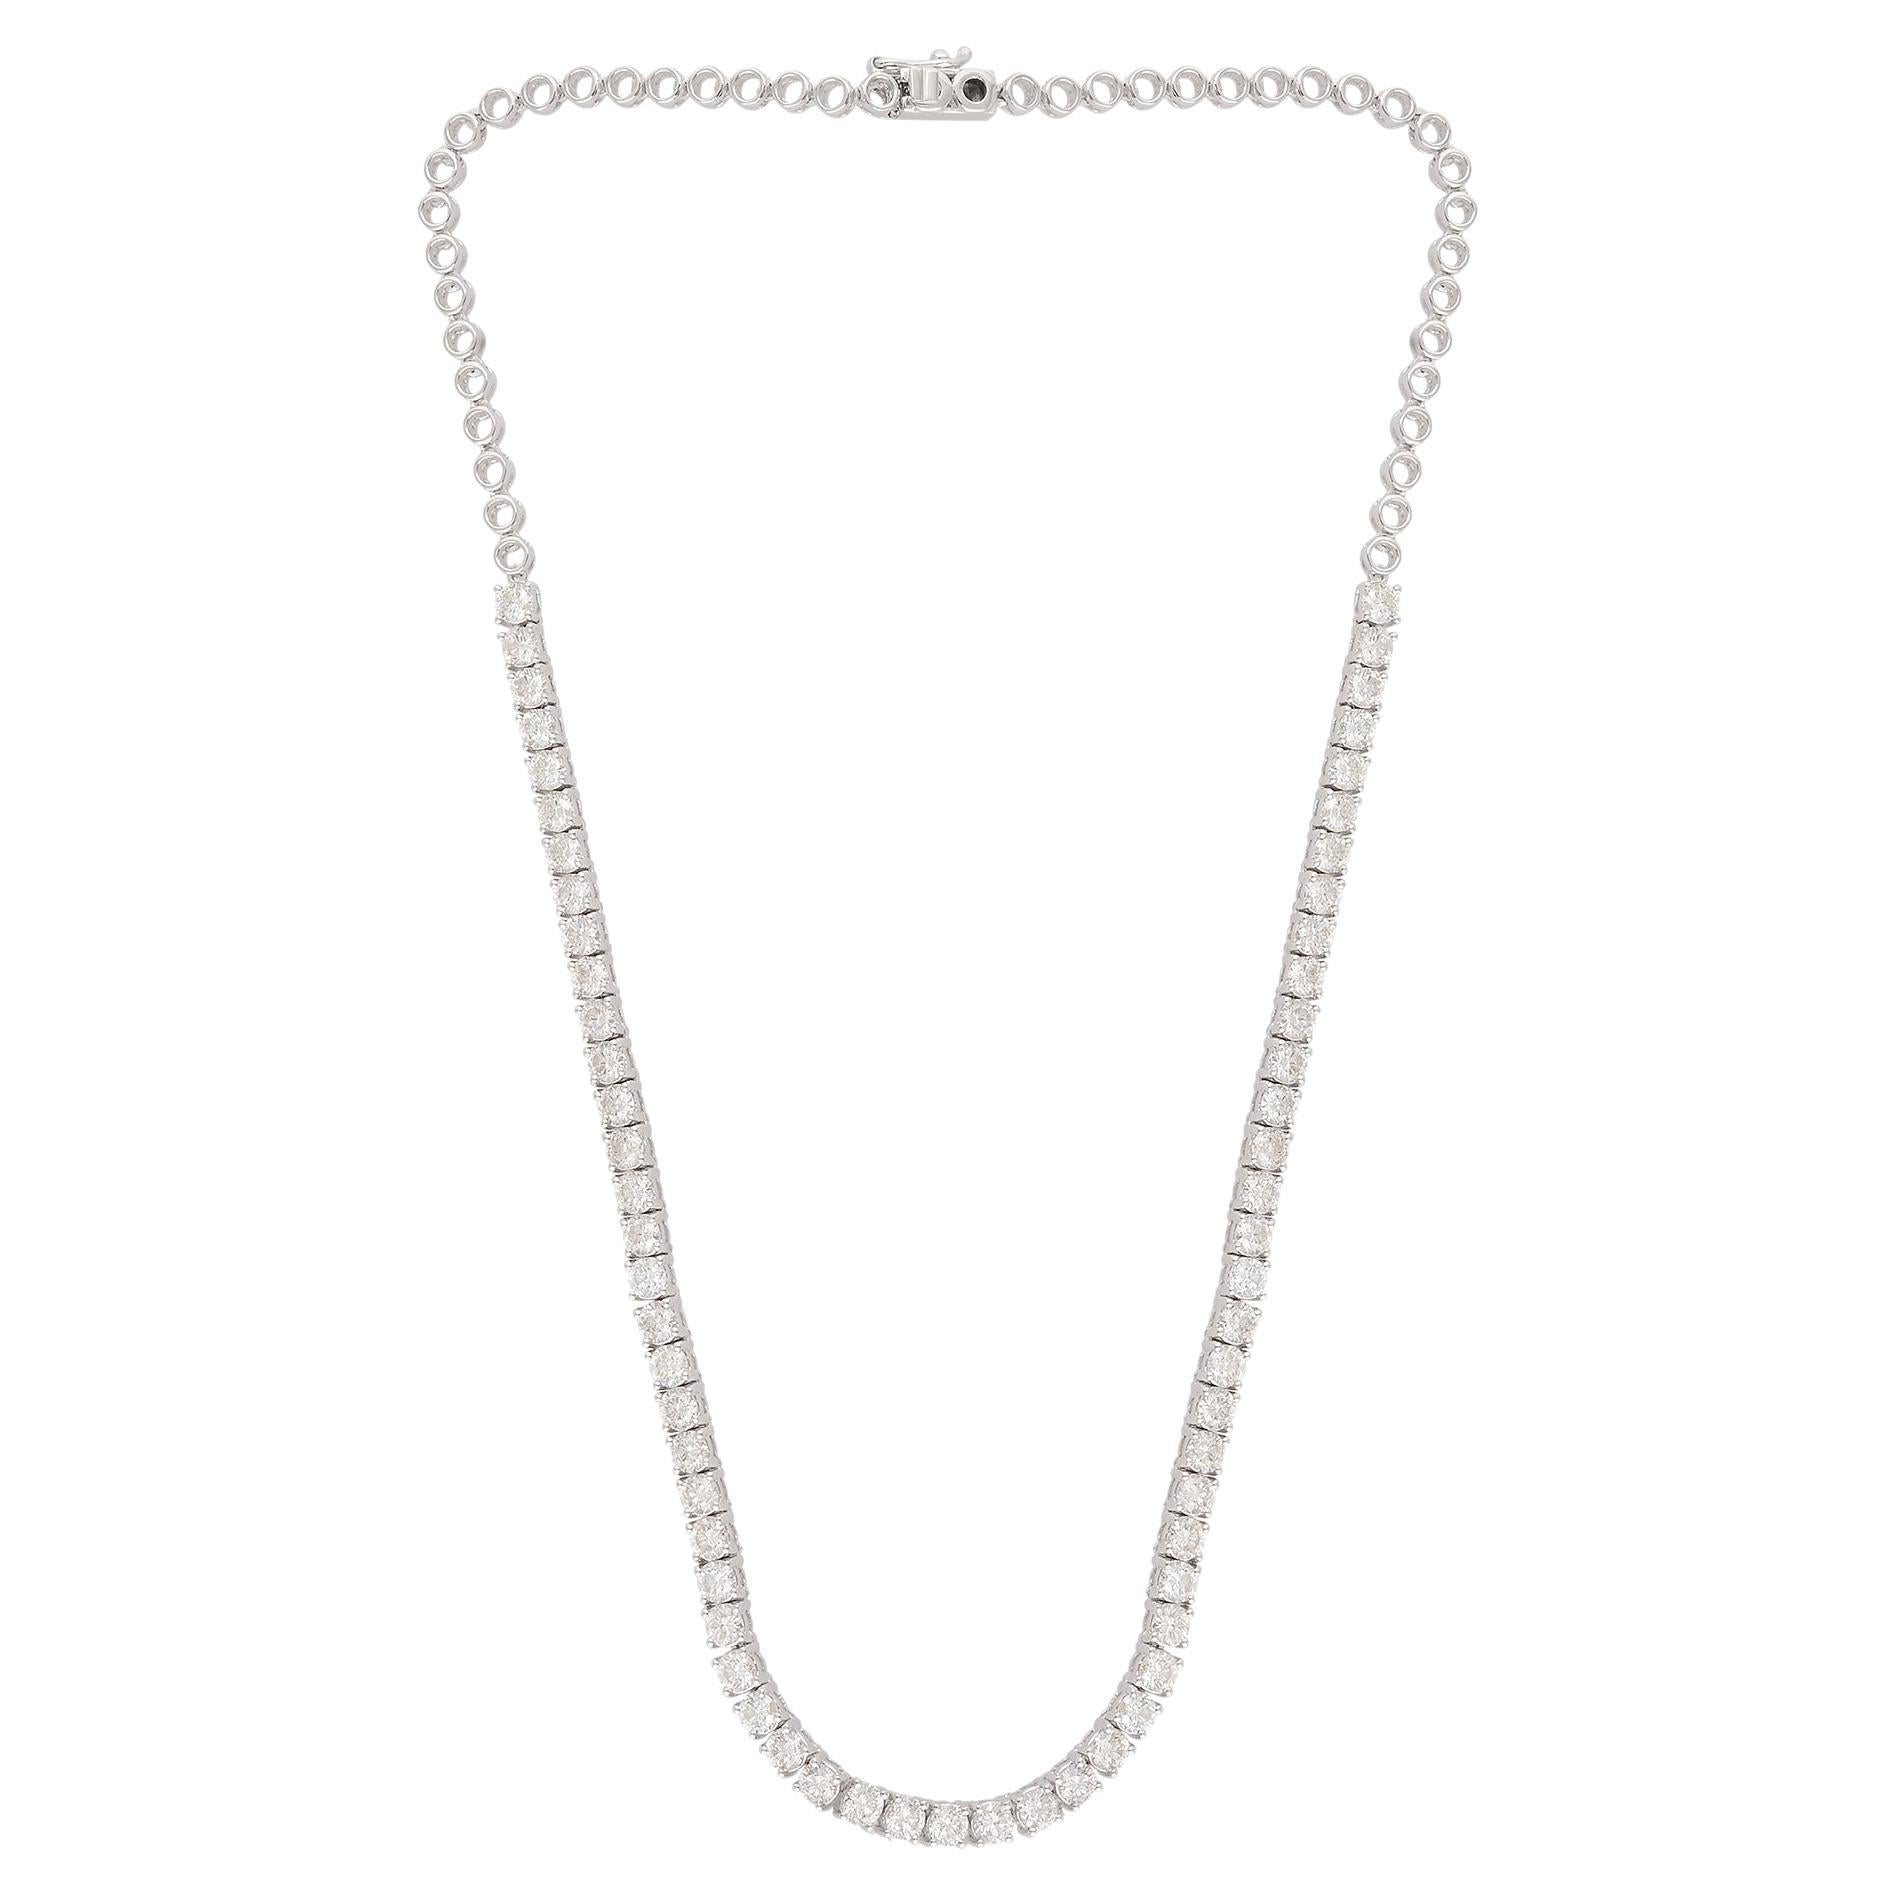 Real 9.25 Carat Diamond Choker Necklace 18 Karat White Gold Handmade Jewelry For Sale